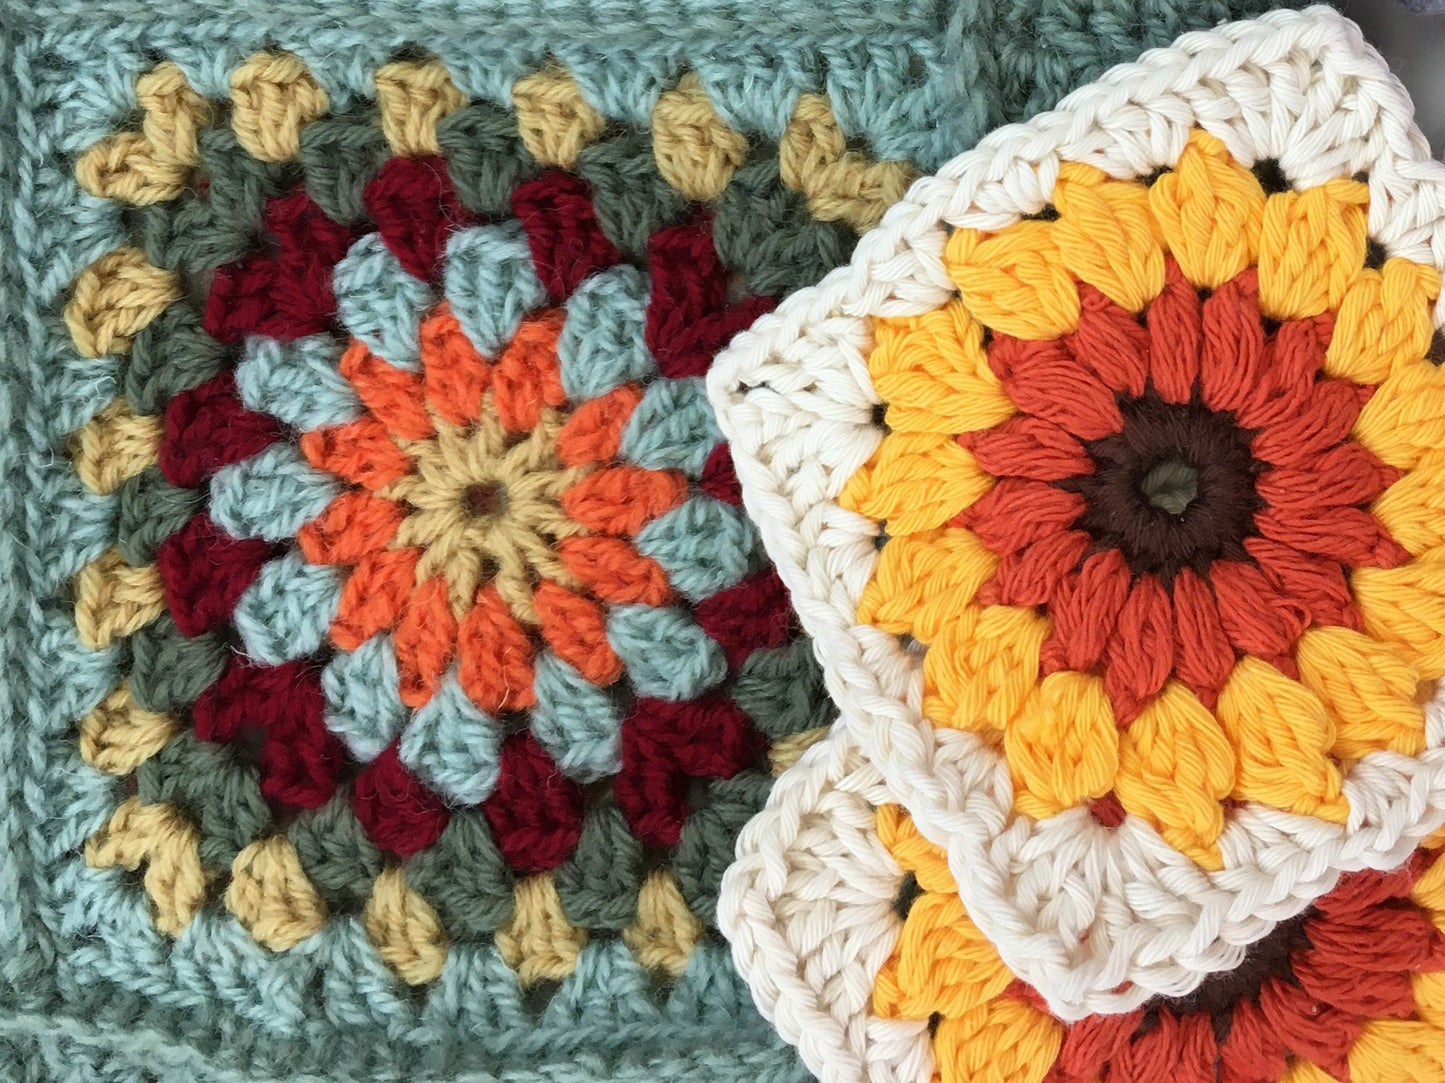 Crochet Next Steps Workshop - Thursday 26th October